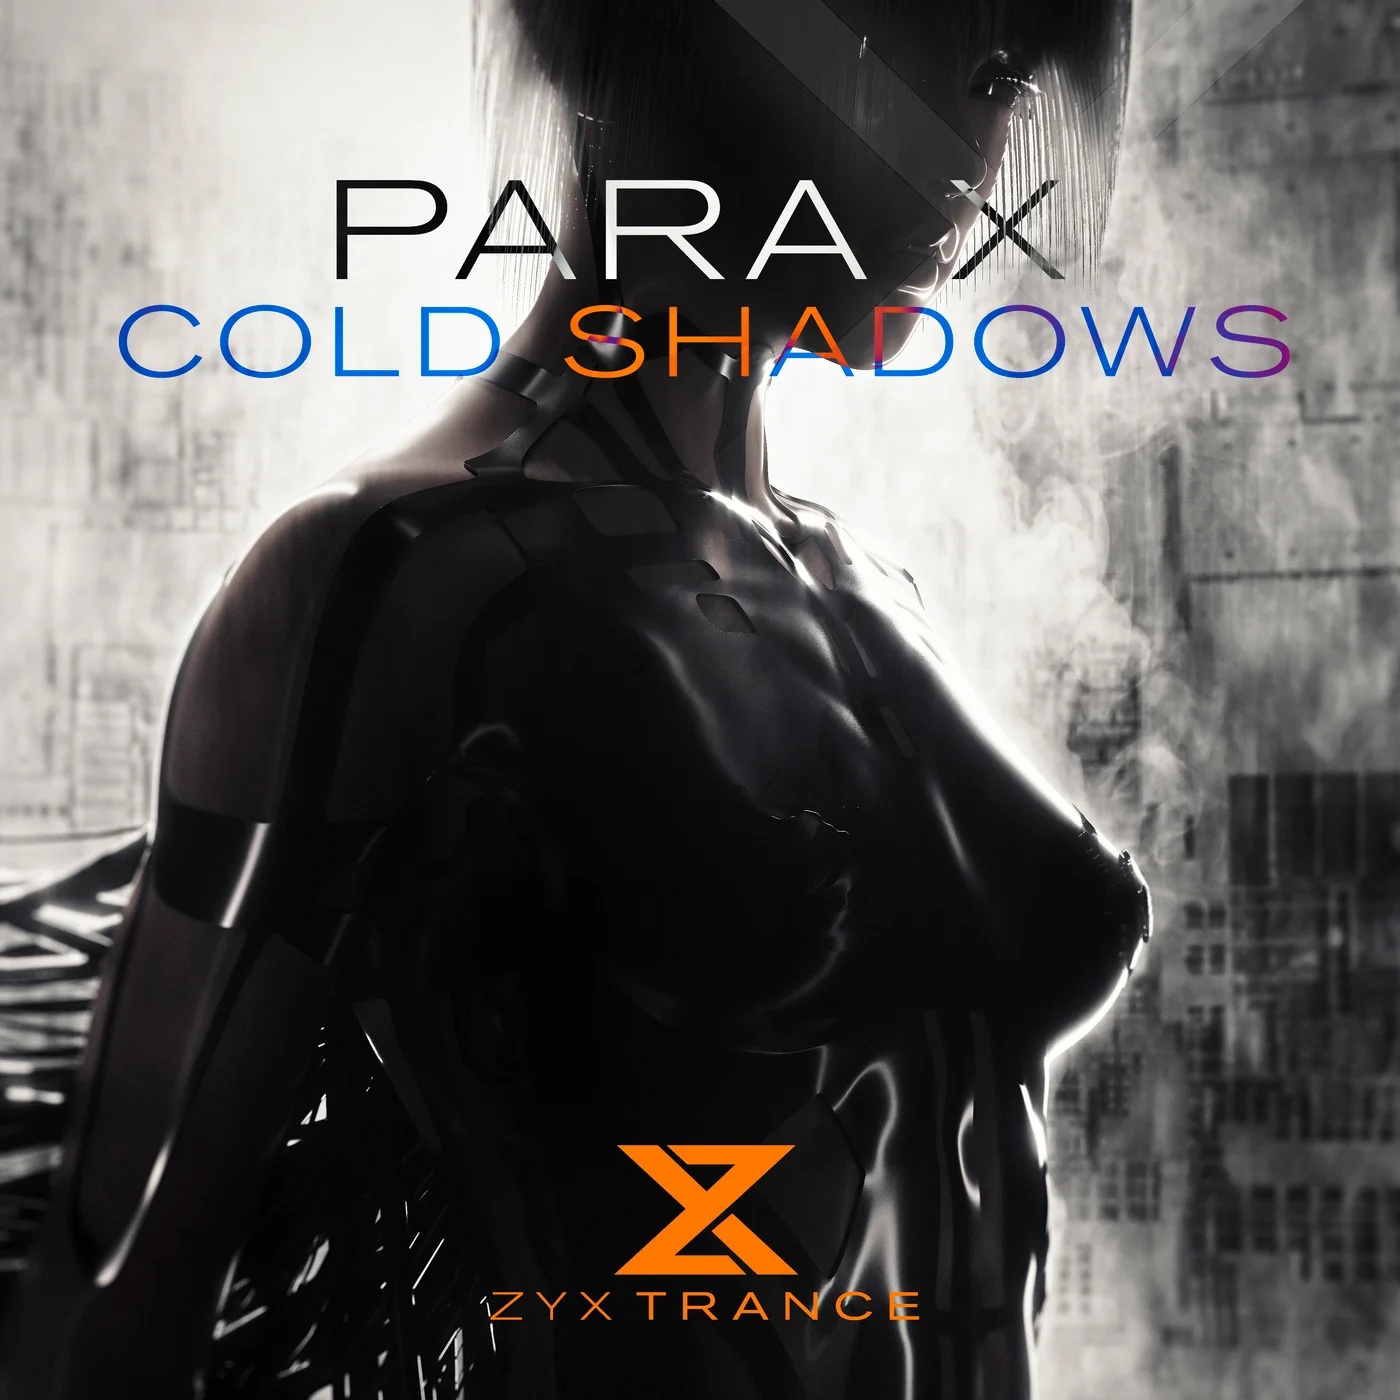 Текст холод шадоу. Холод шадоу рейз. Холод Шедоу рейз обложка. Cold Lighting with Cold Shadows. X Extended.